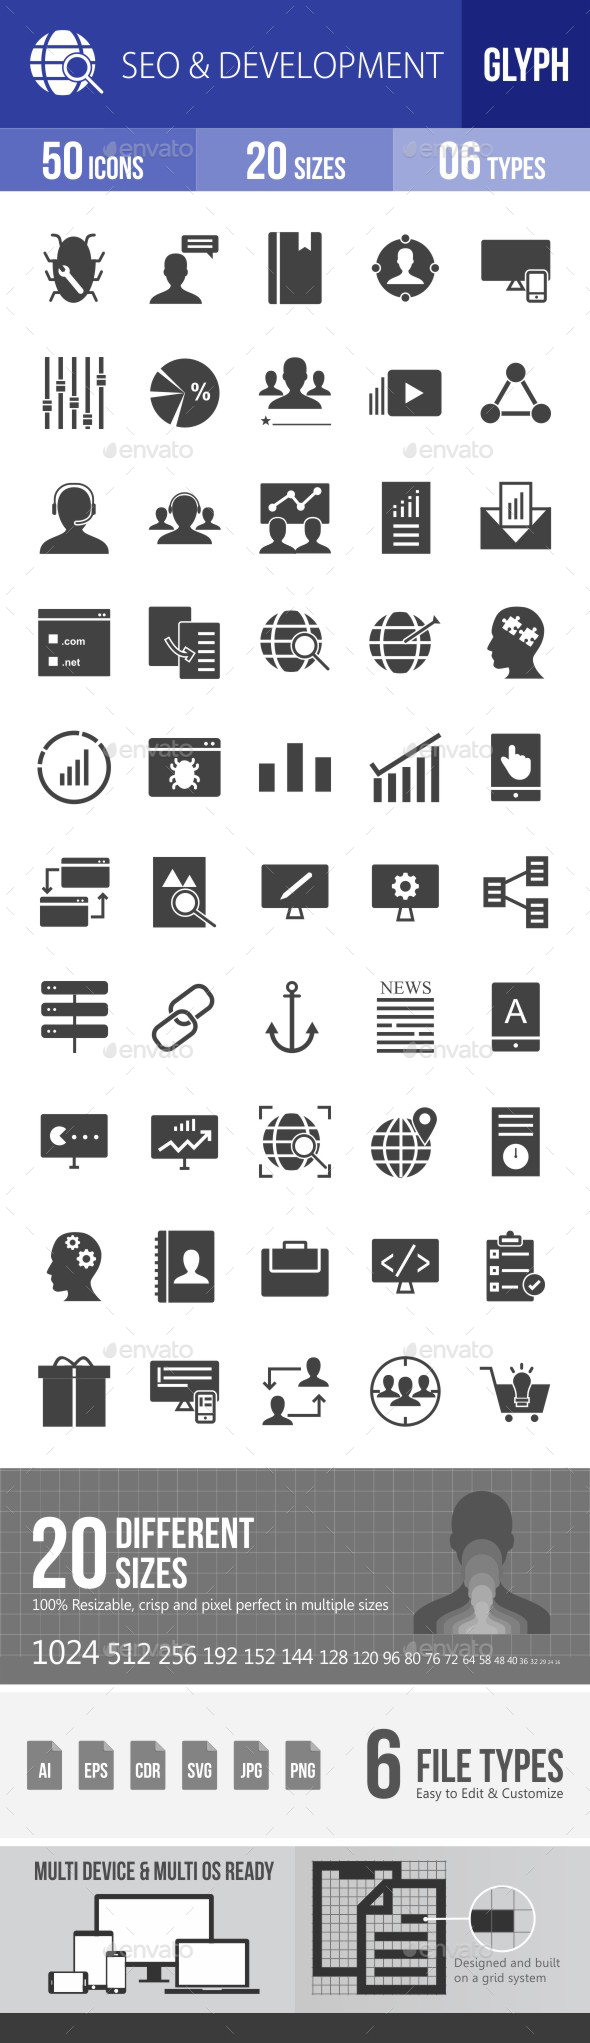 SEO & Development Services Glyph Icons